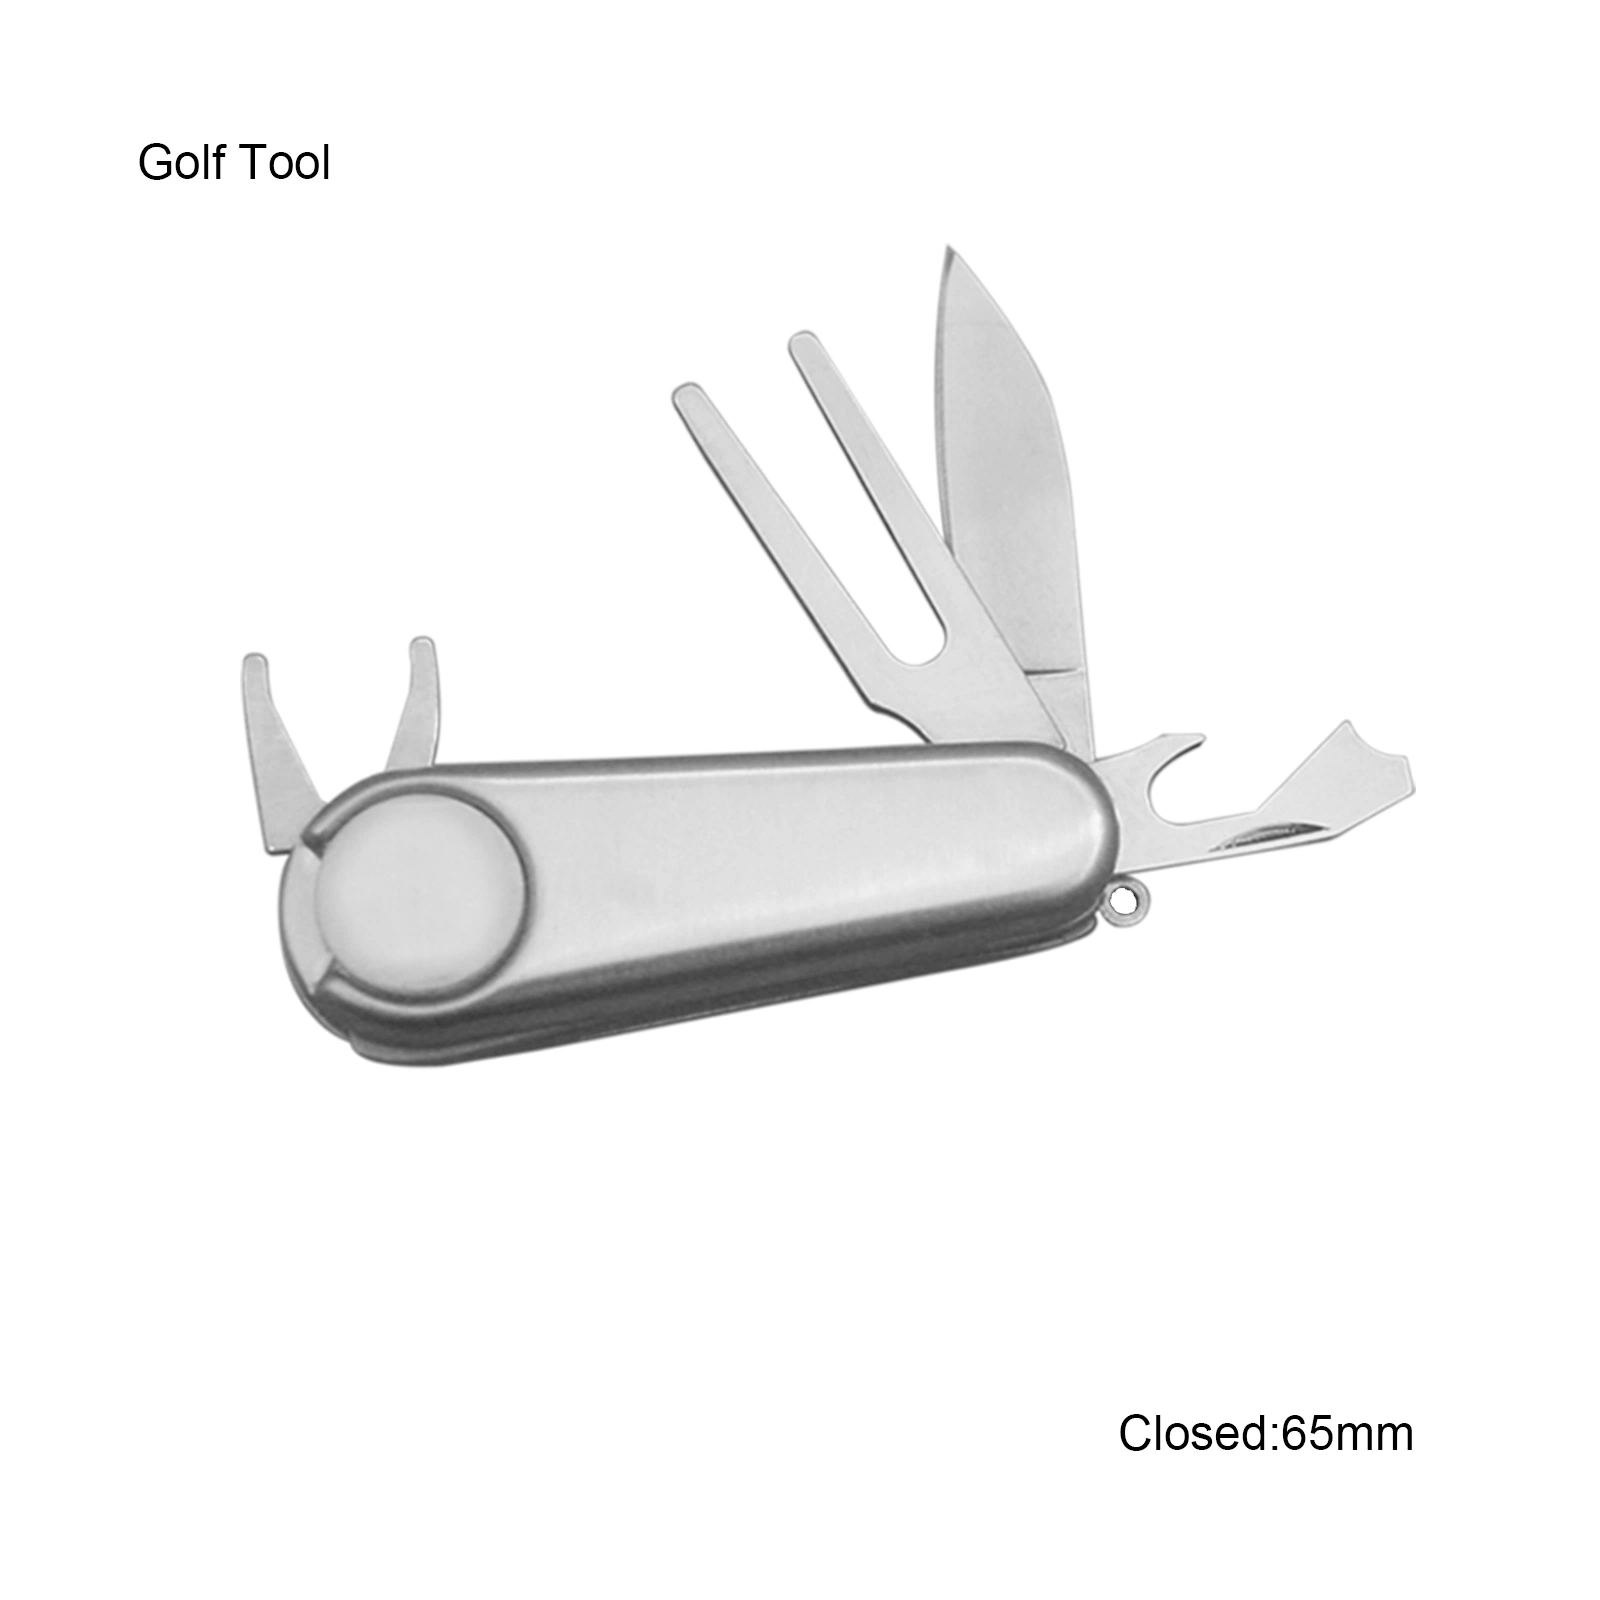 Ferramenta multifunções ferramenta utilitária ferramenta de golfe (# 625)